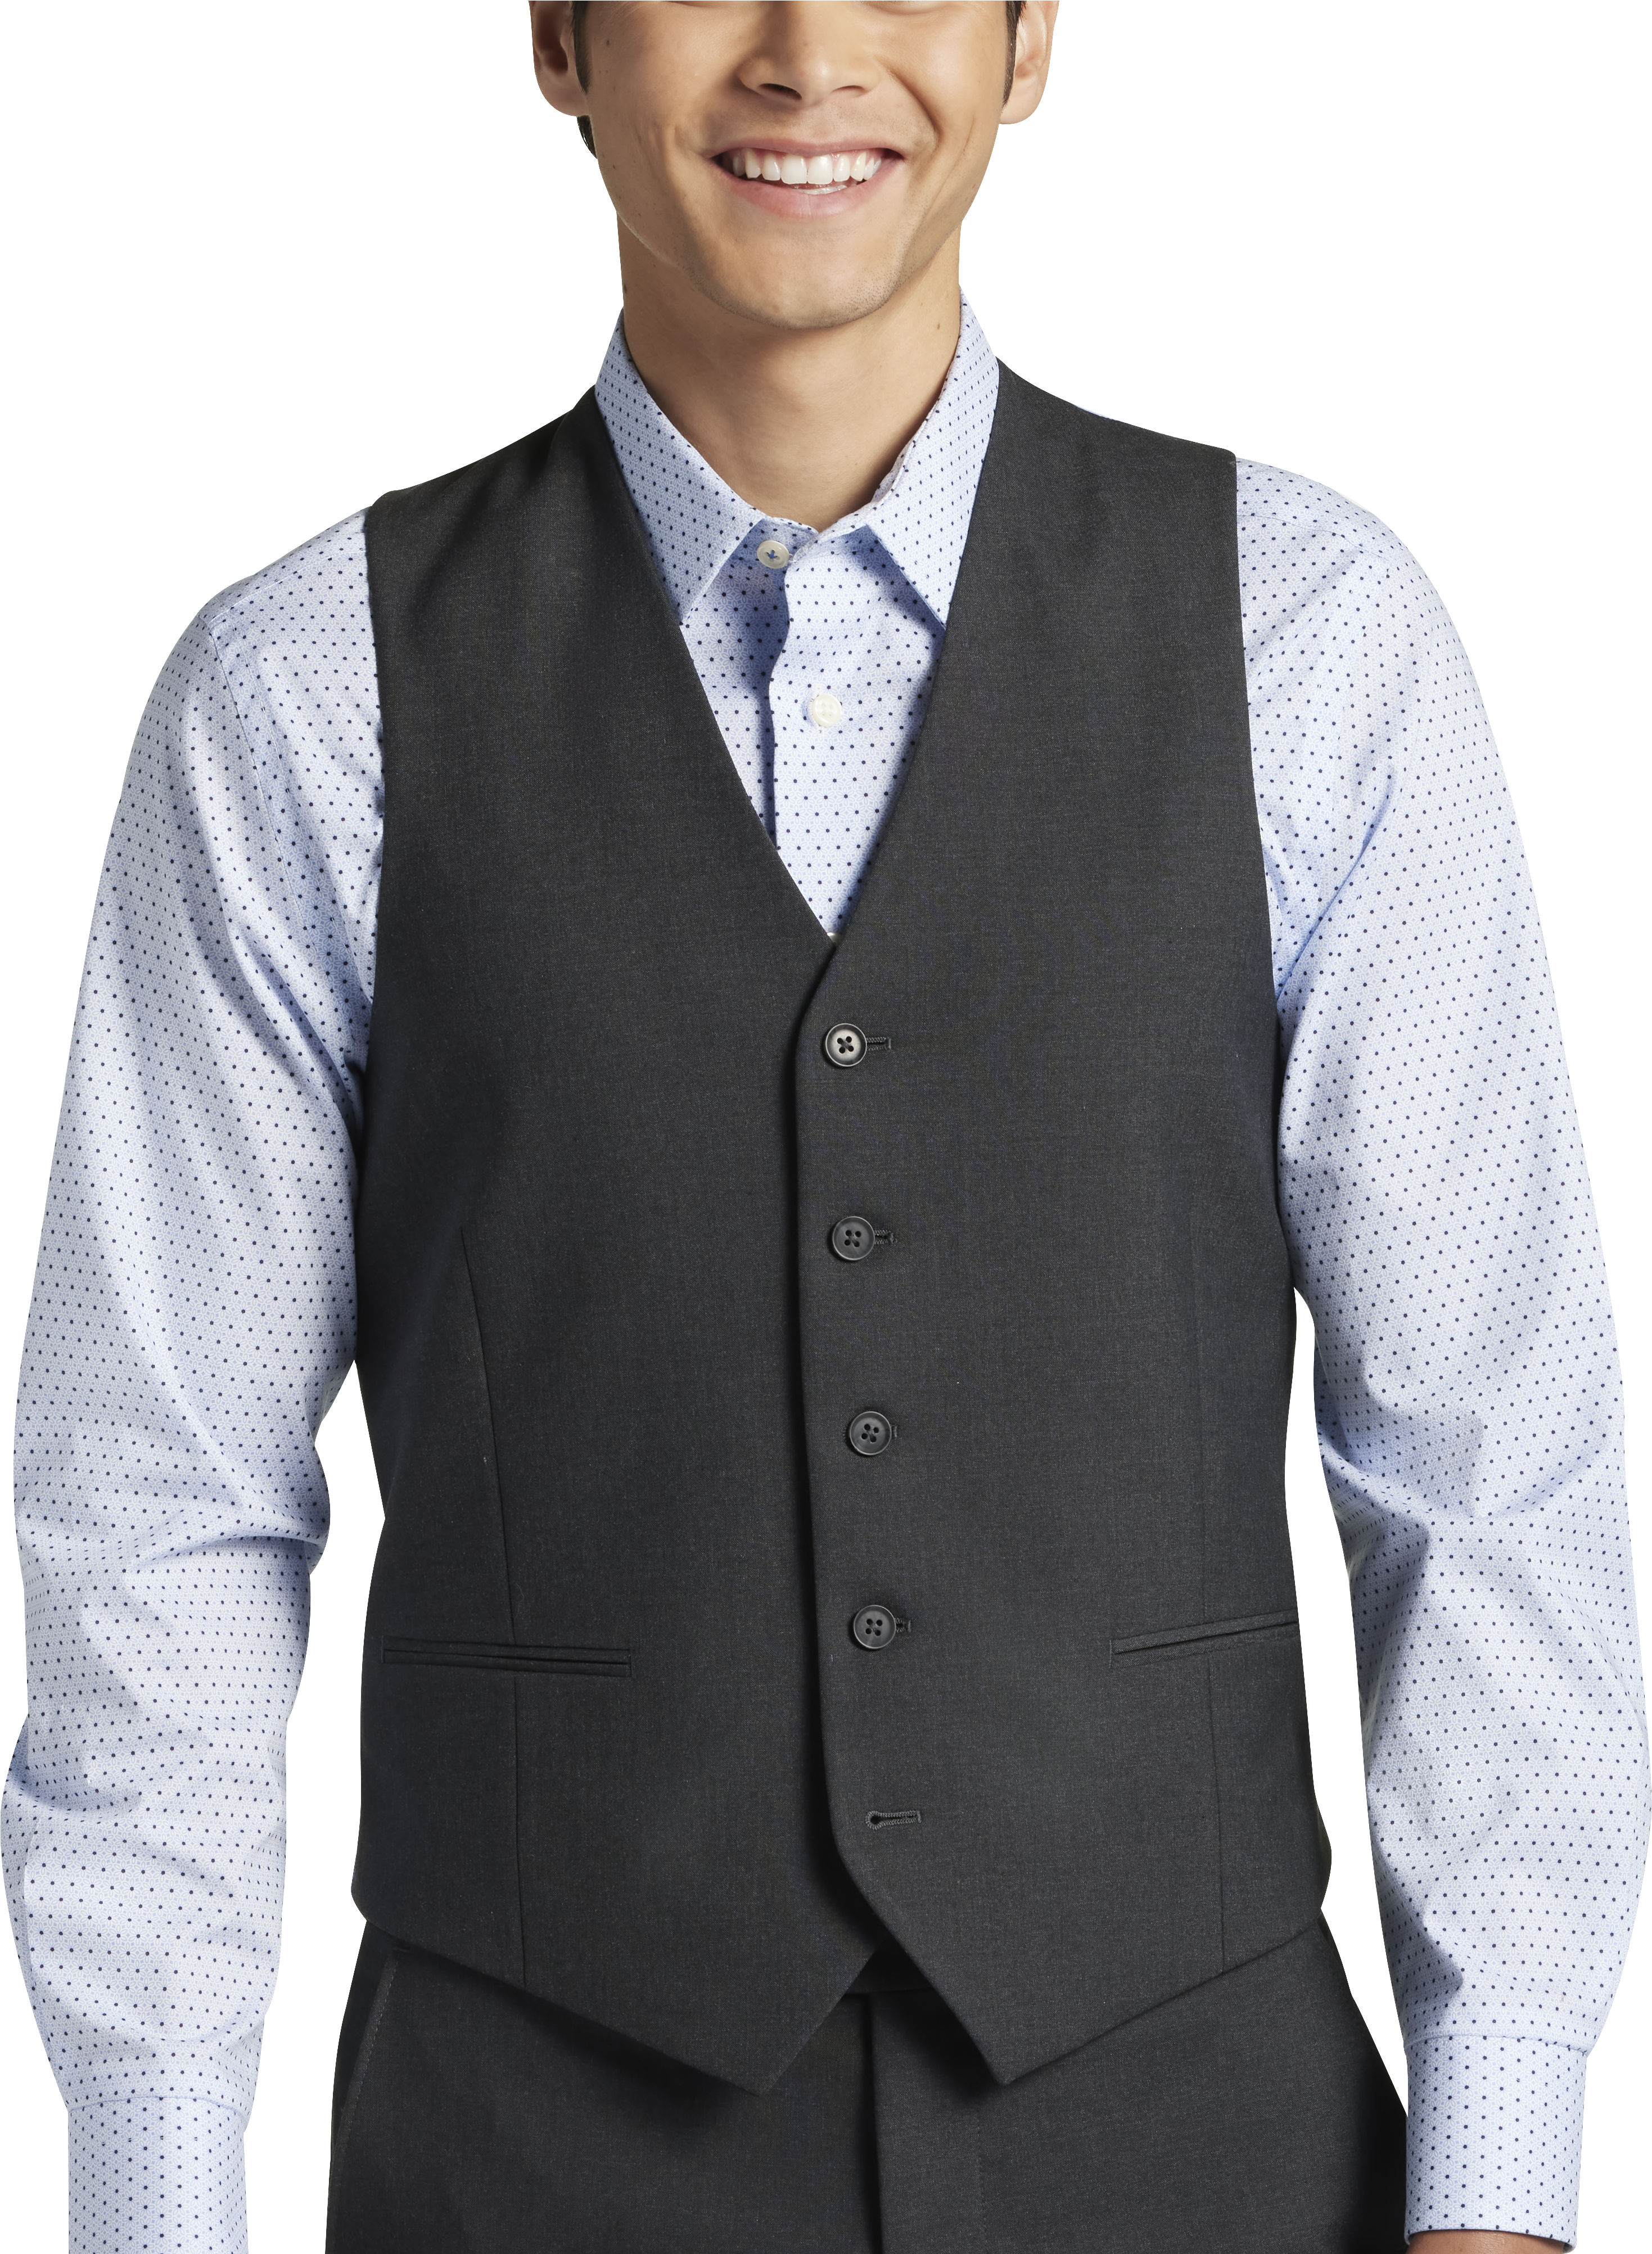 Egara Skinny Fit Suit Separates Vest, Charcoal Gray - Men's Suits | Men ...